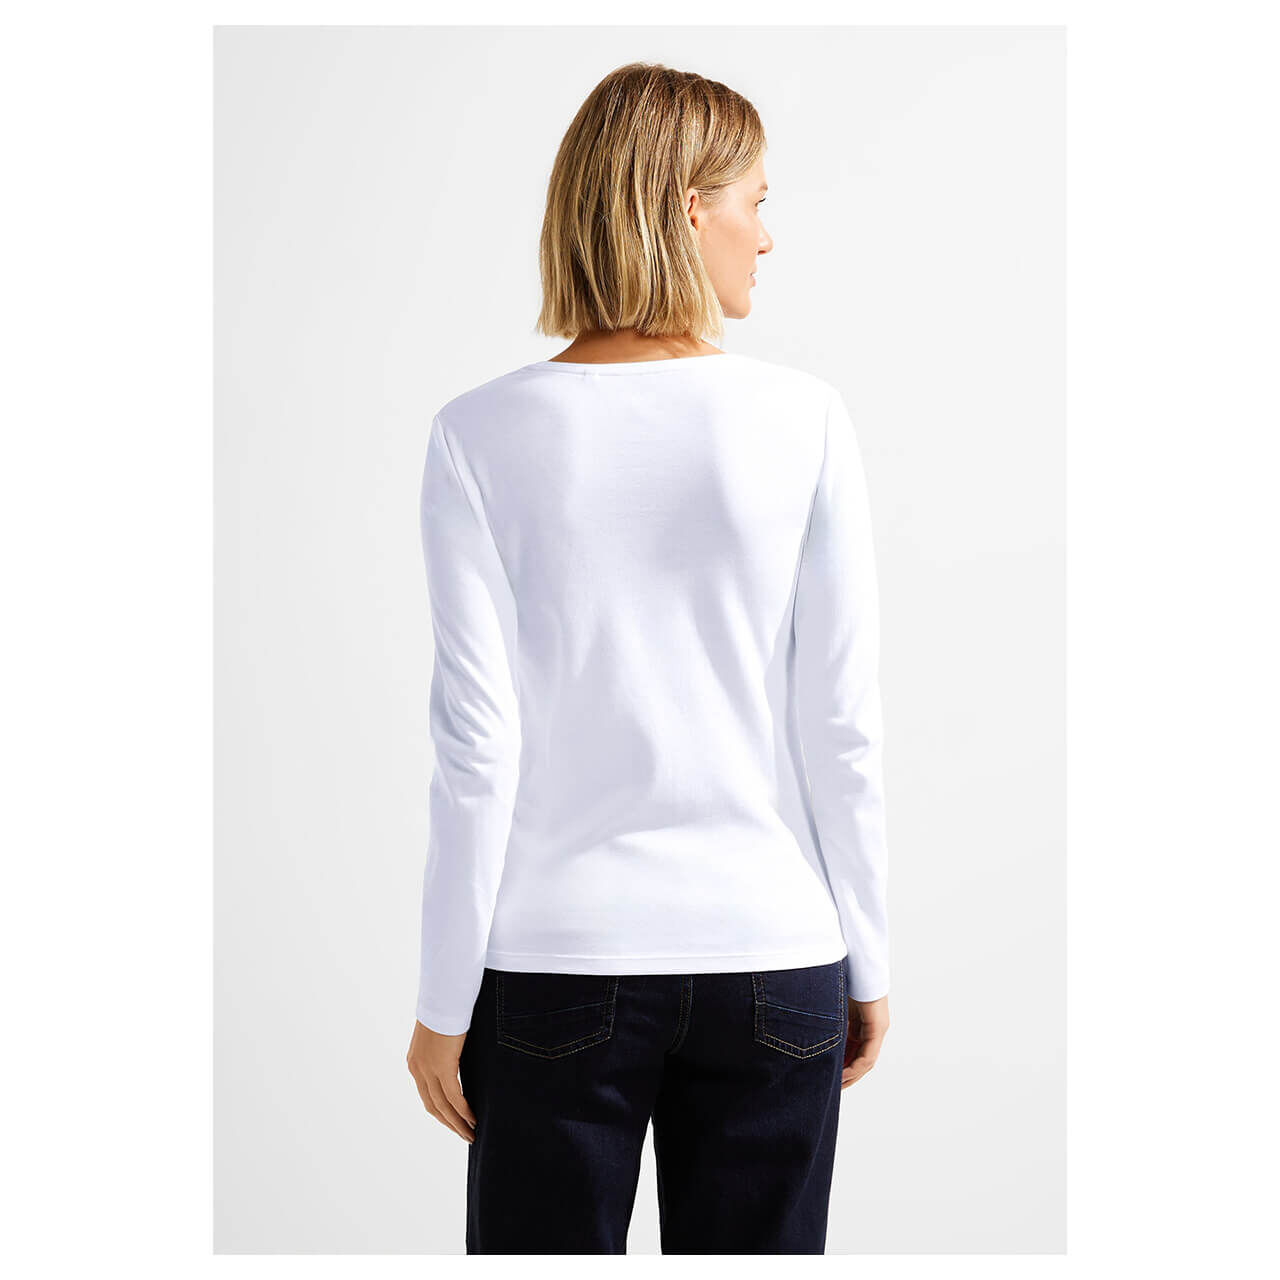 Cecil Pia Langarm Shirt white